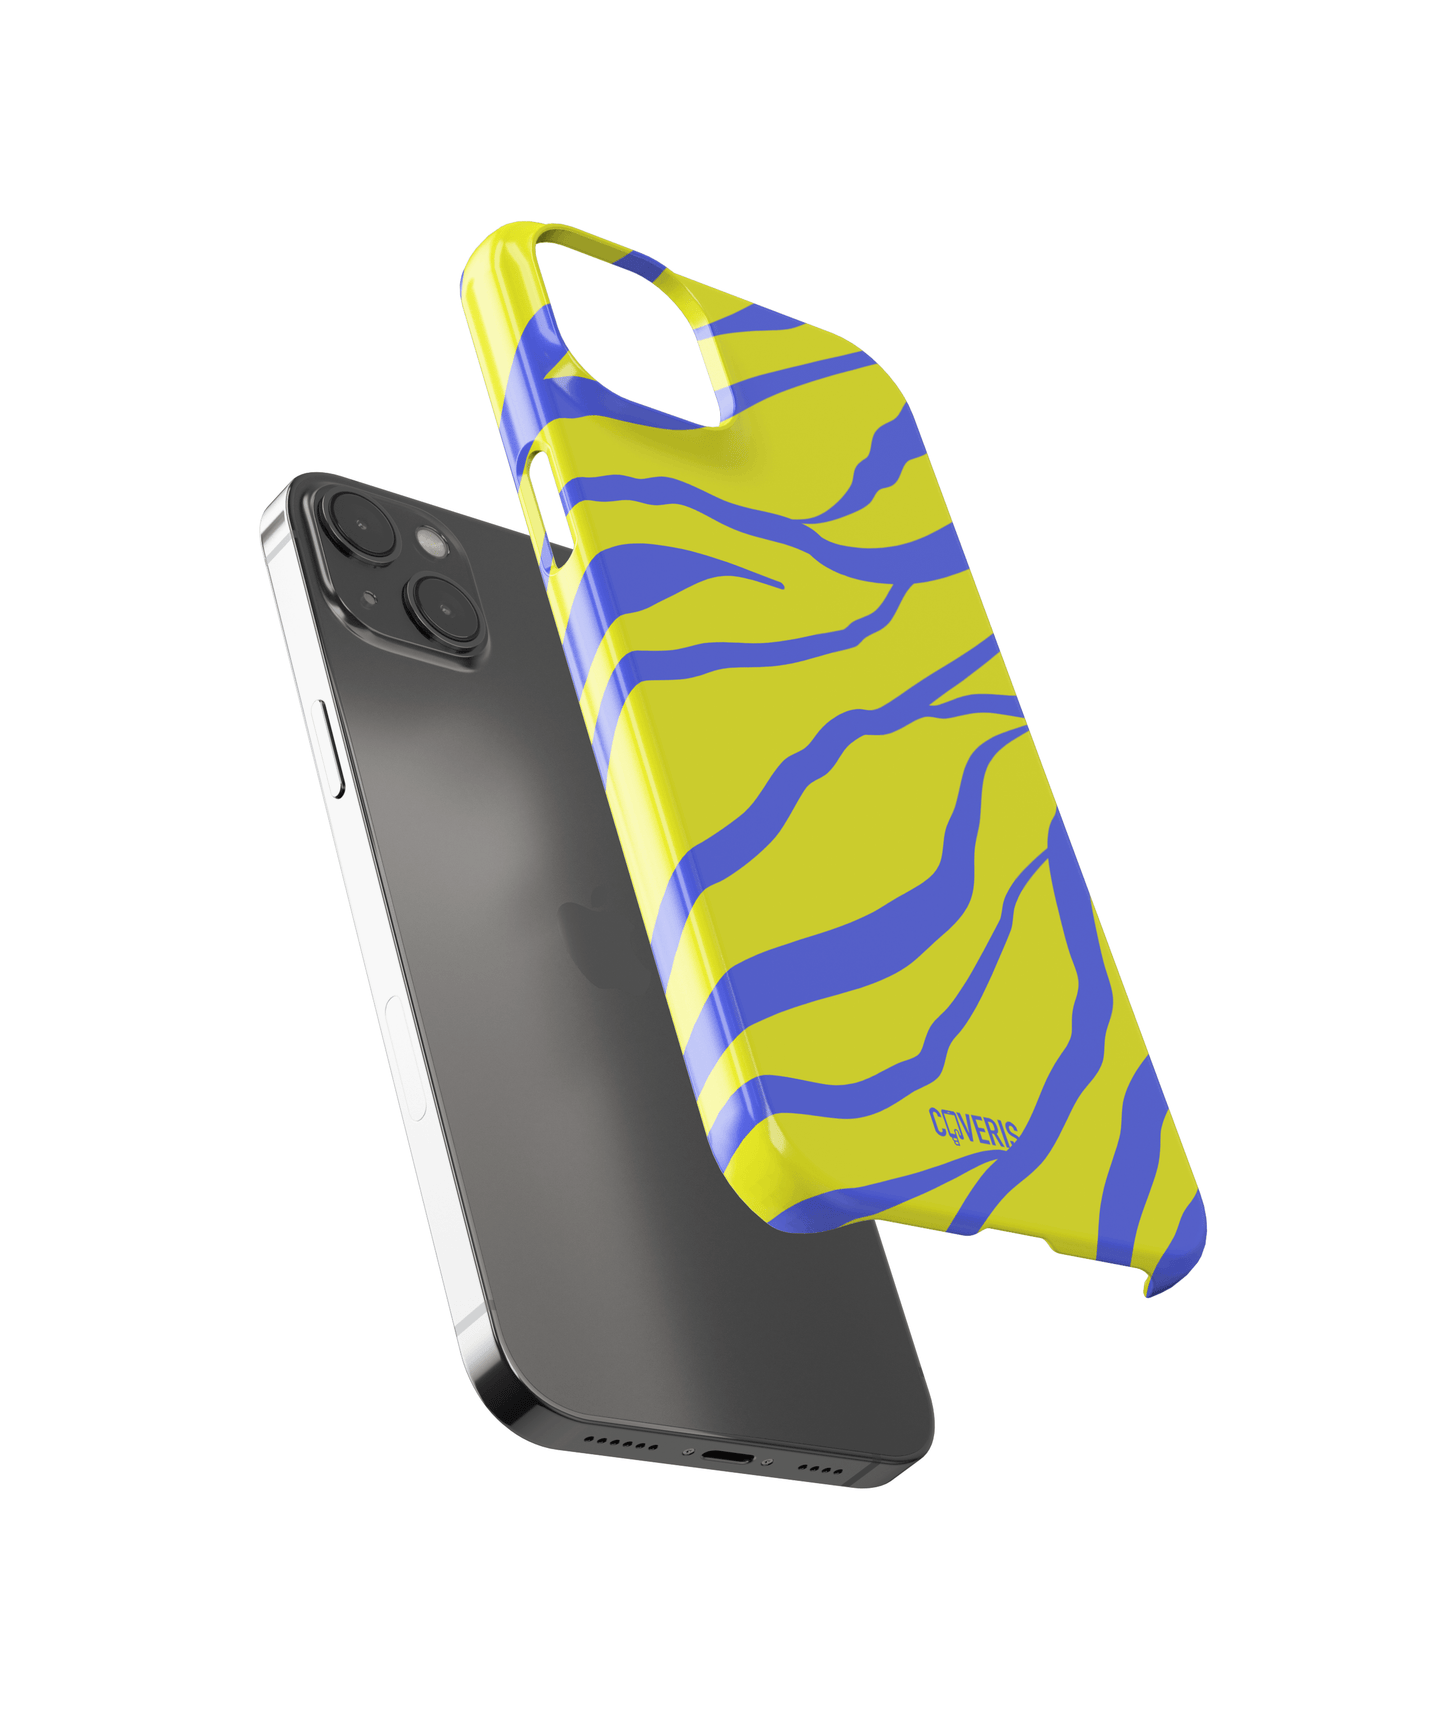 Neonique - Google Pixel 2 phone case